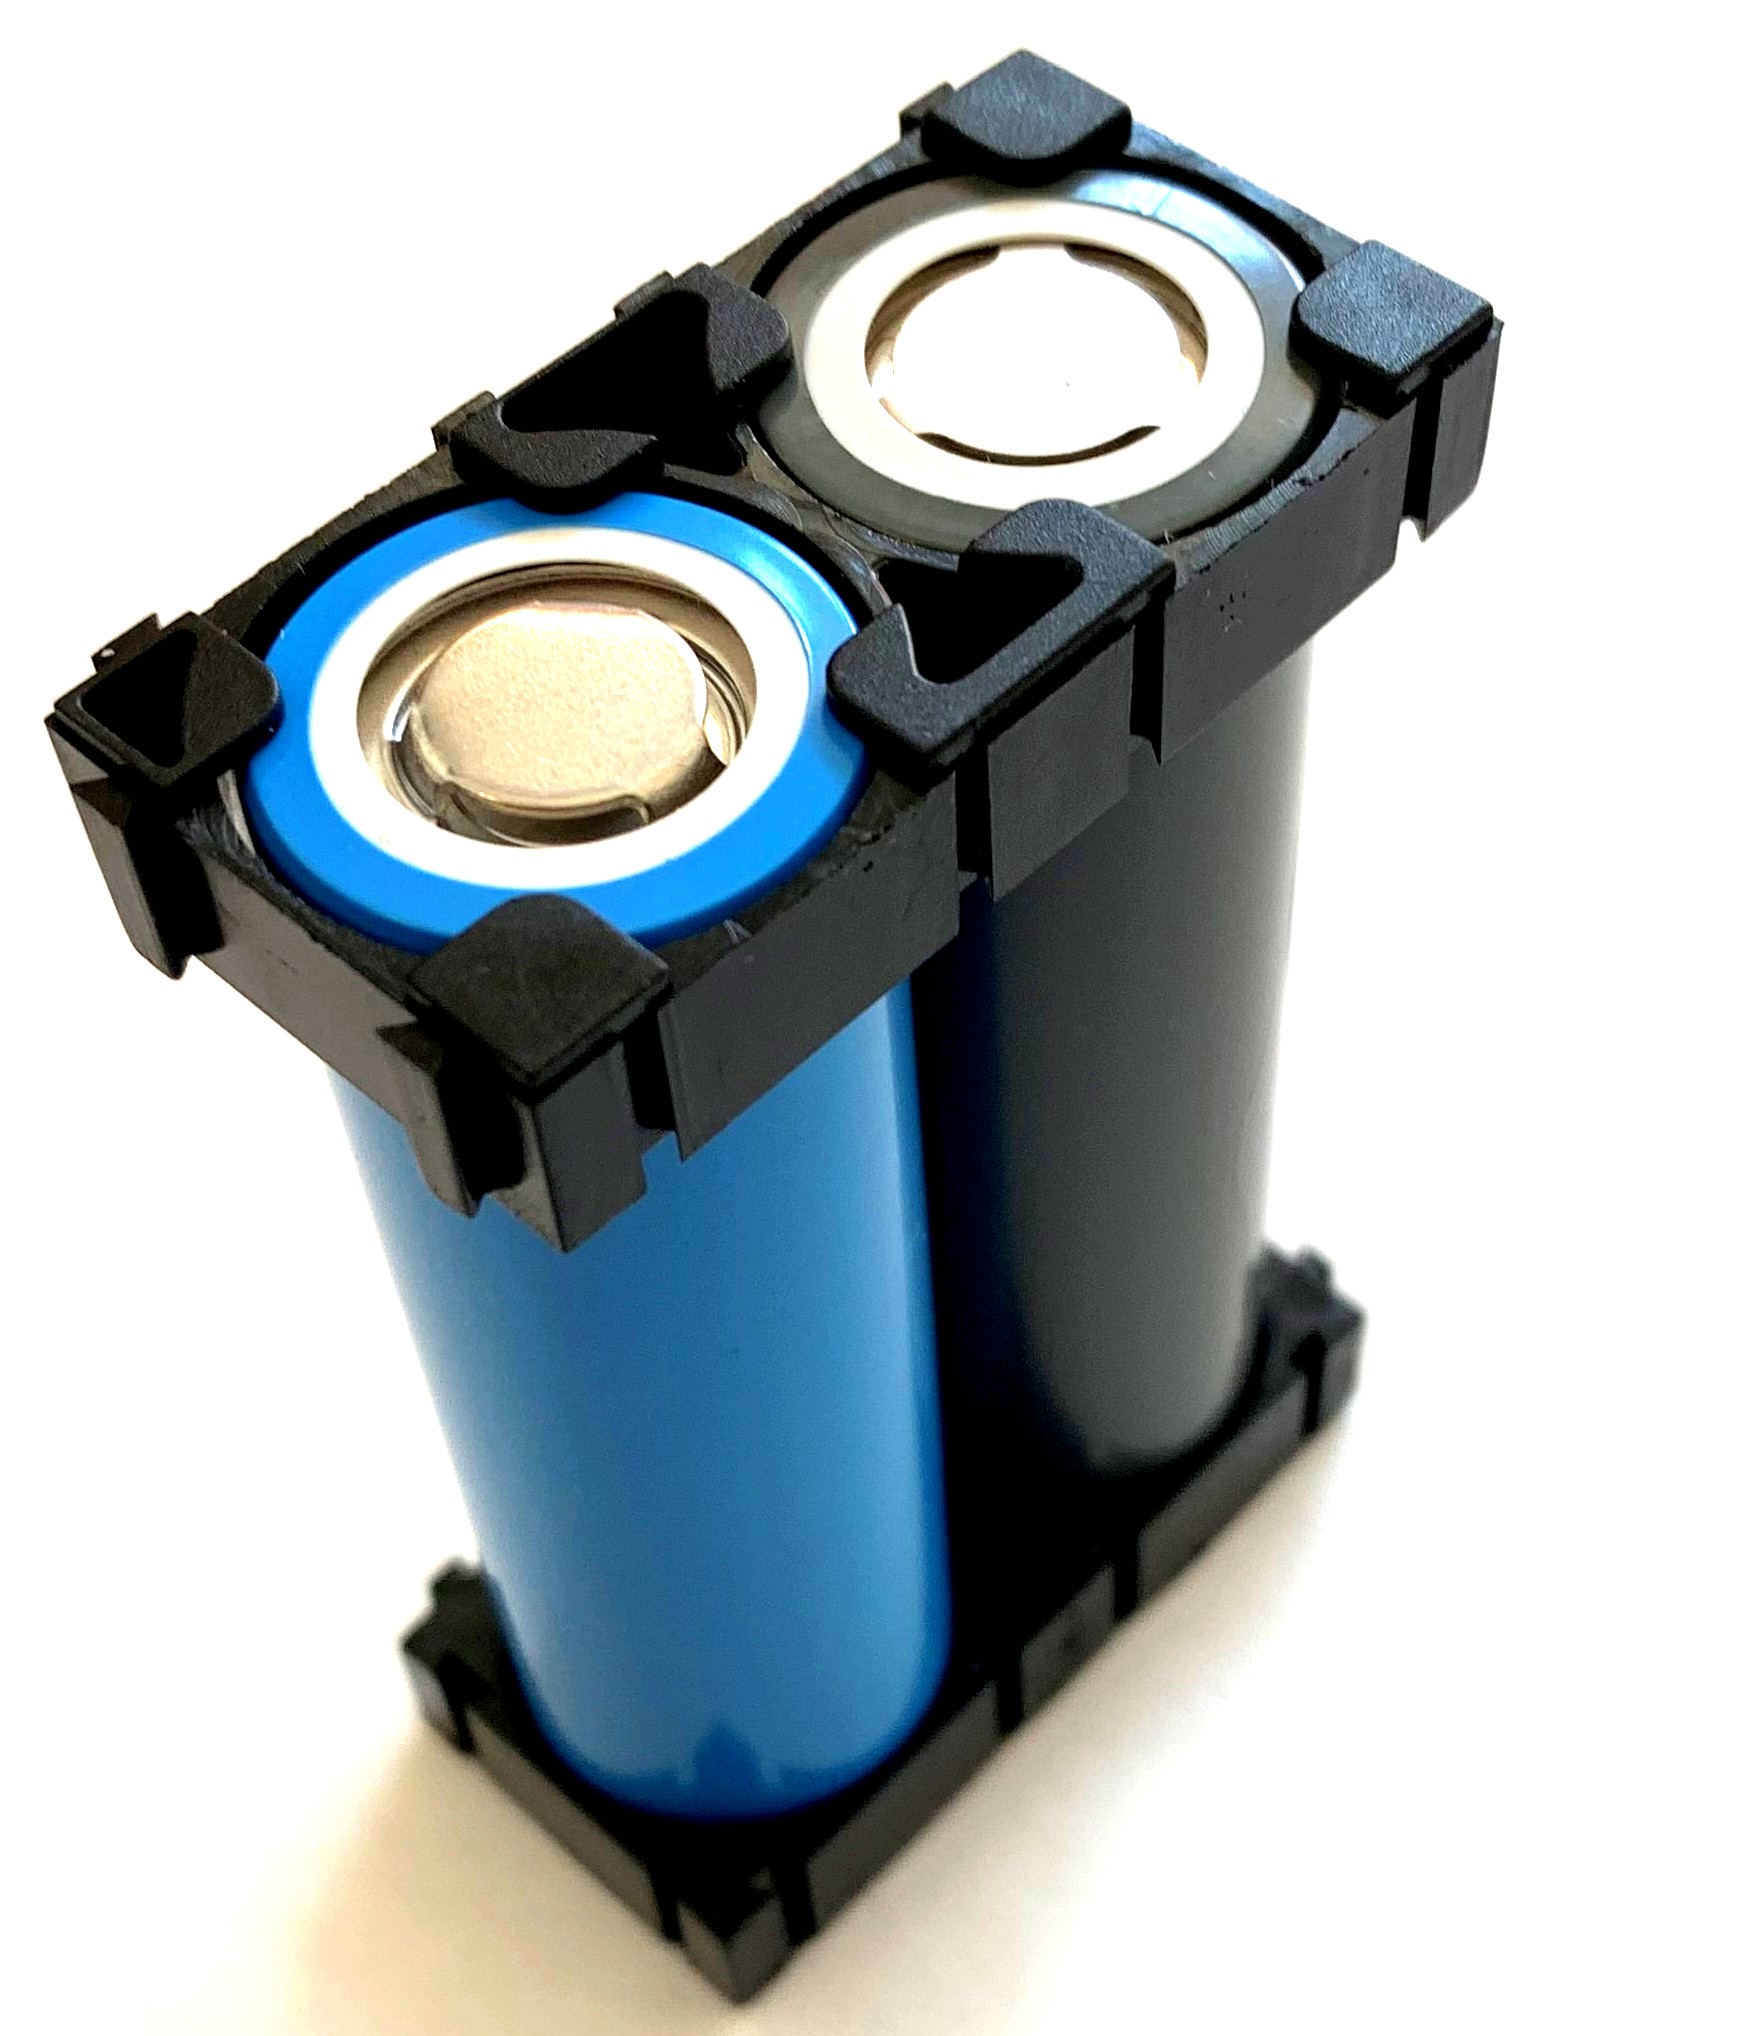 Battery Spacer holder for 2 batteries size 21700